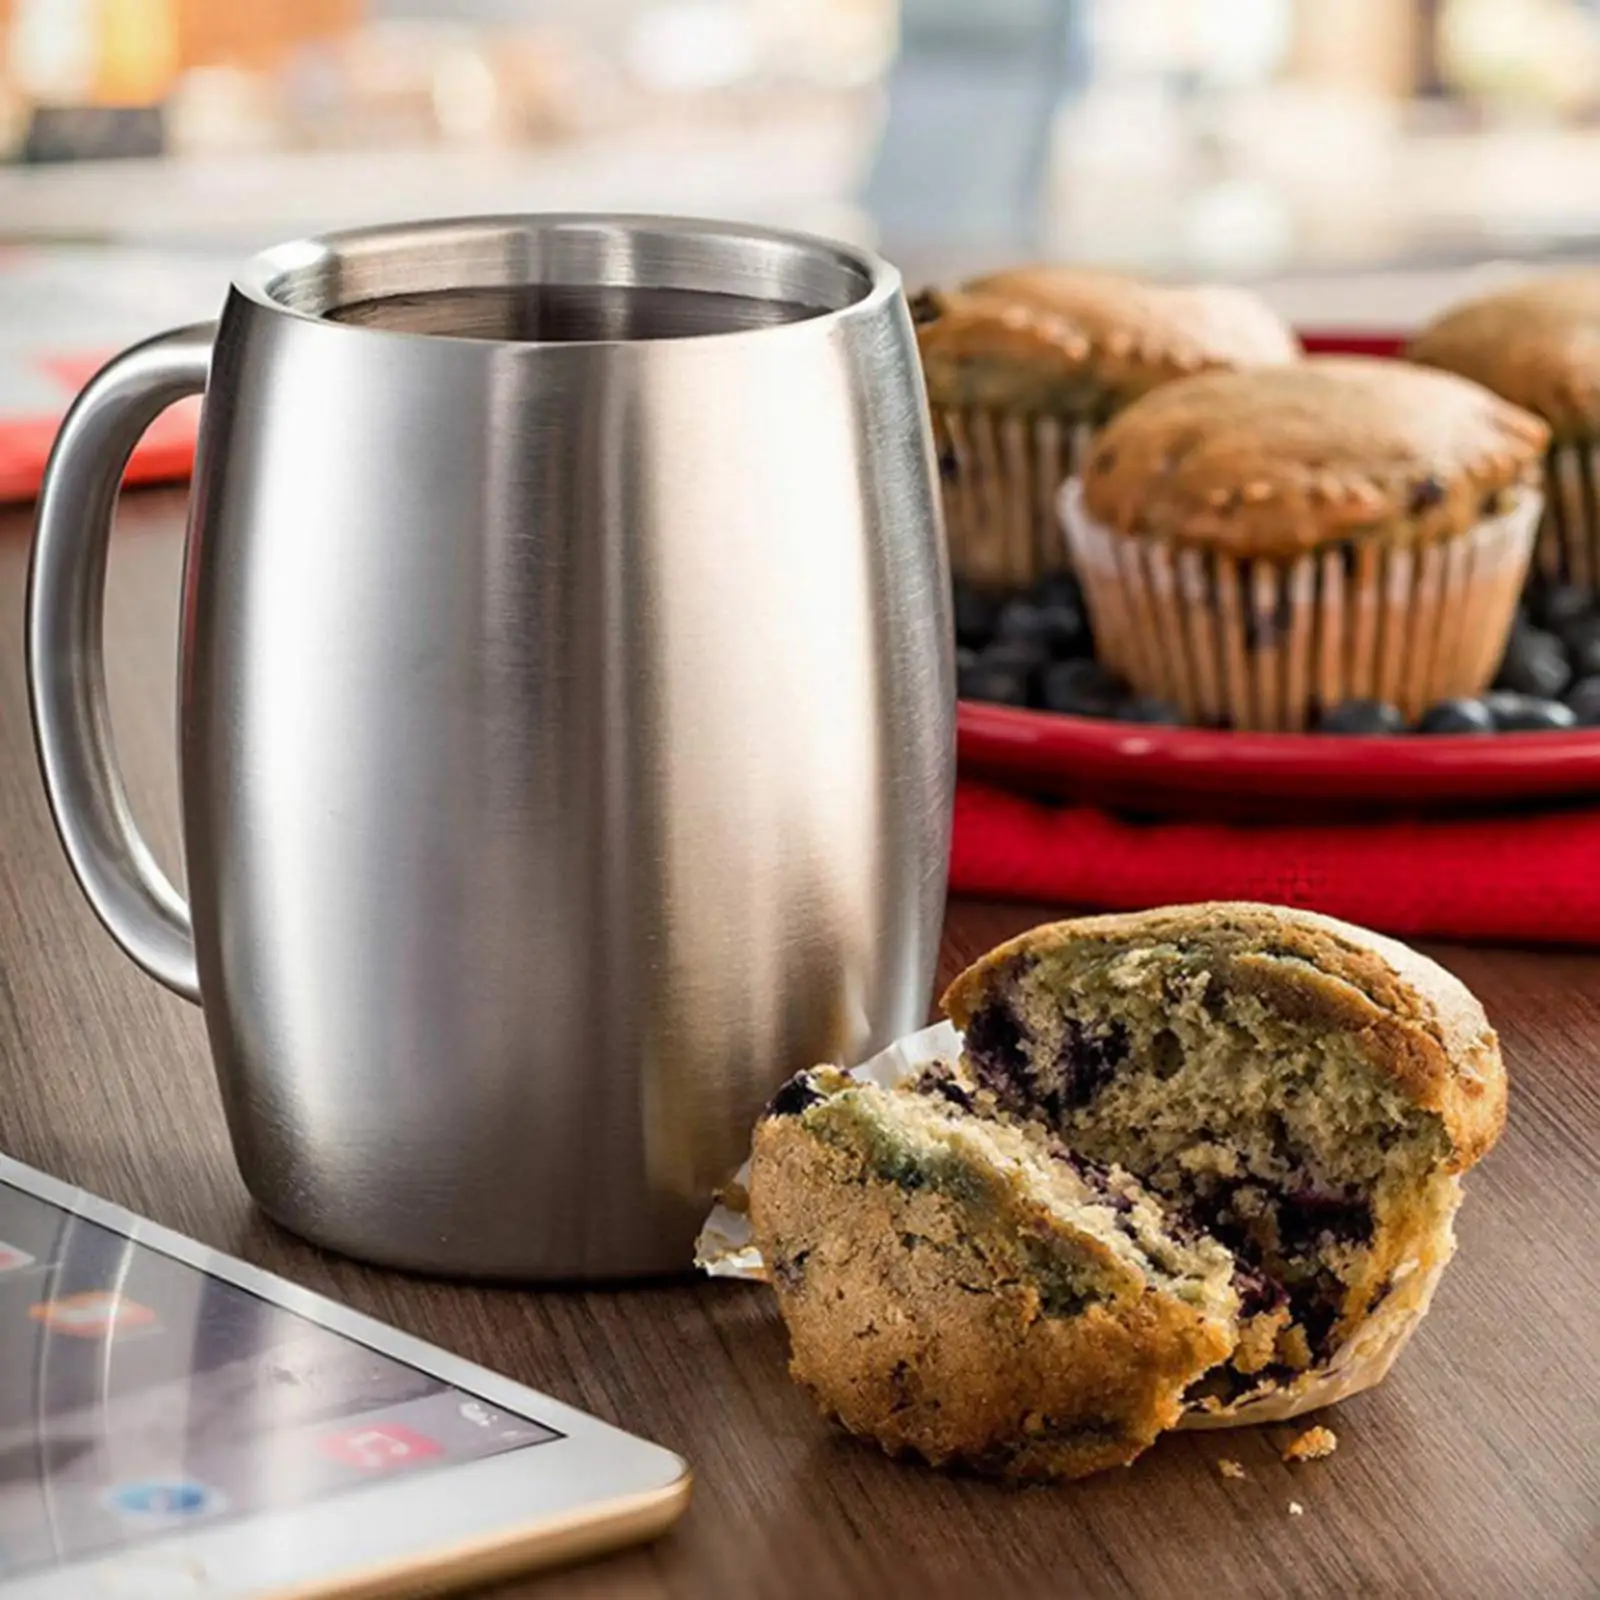 420ml Travel Stainless Steel Coffee Mug  Insulated  Cup, Keeps